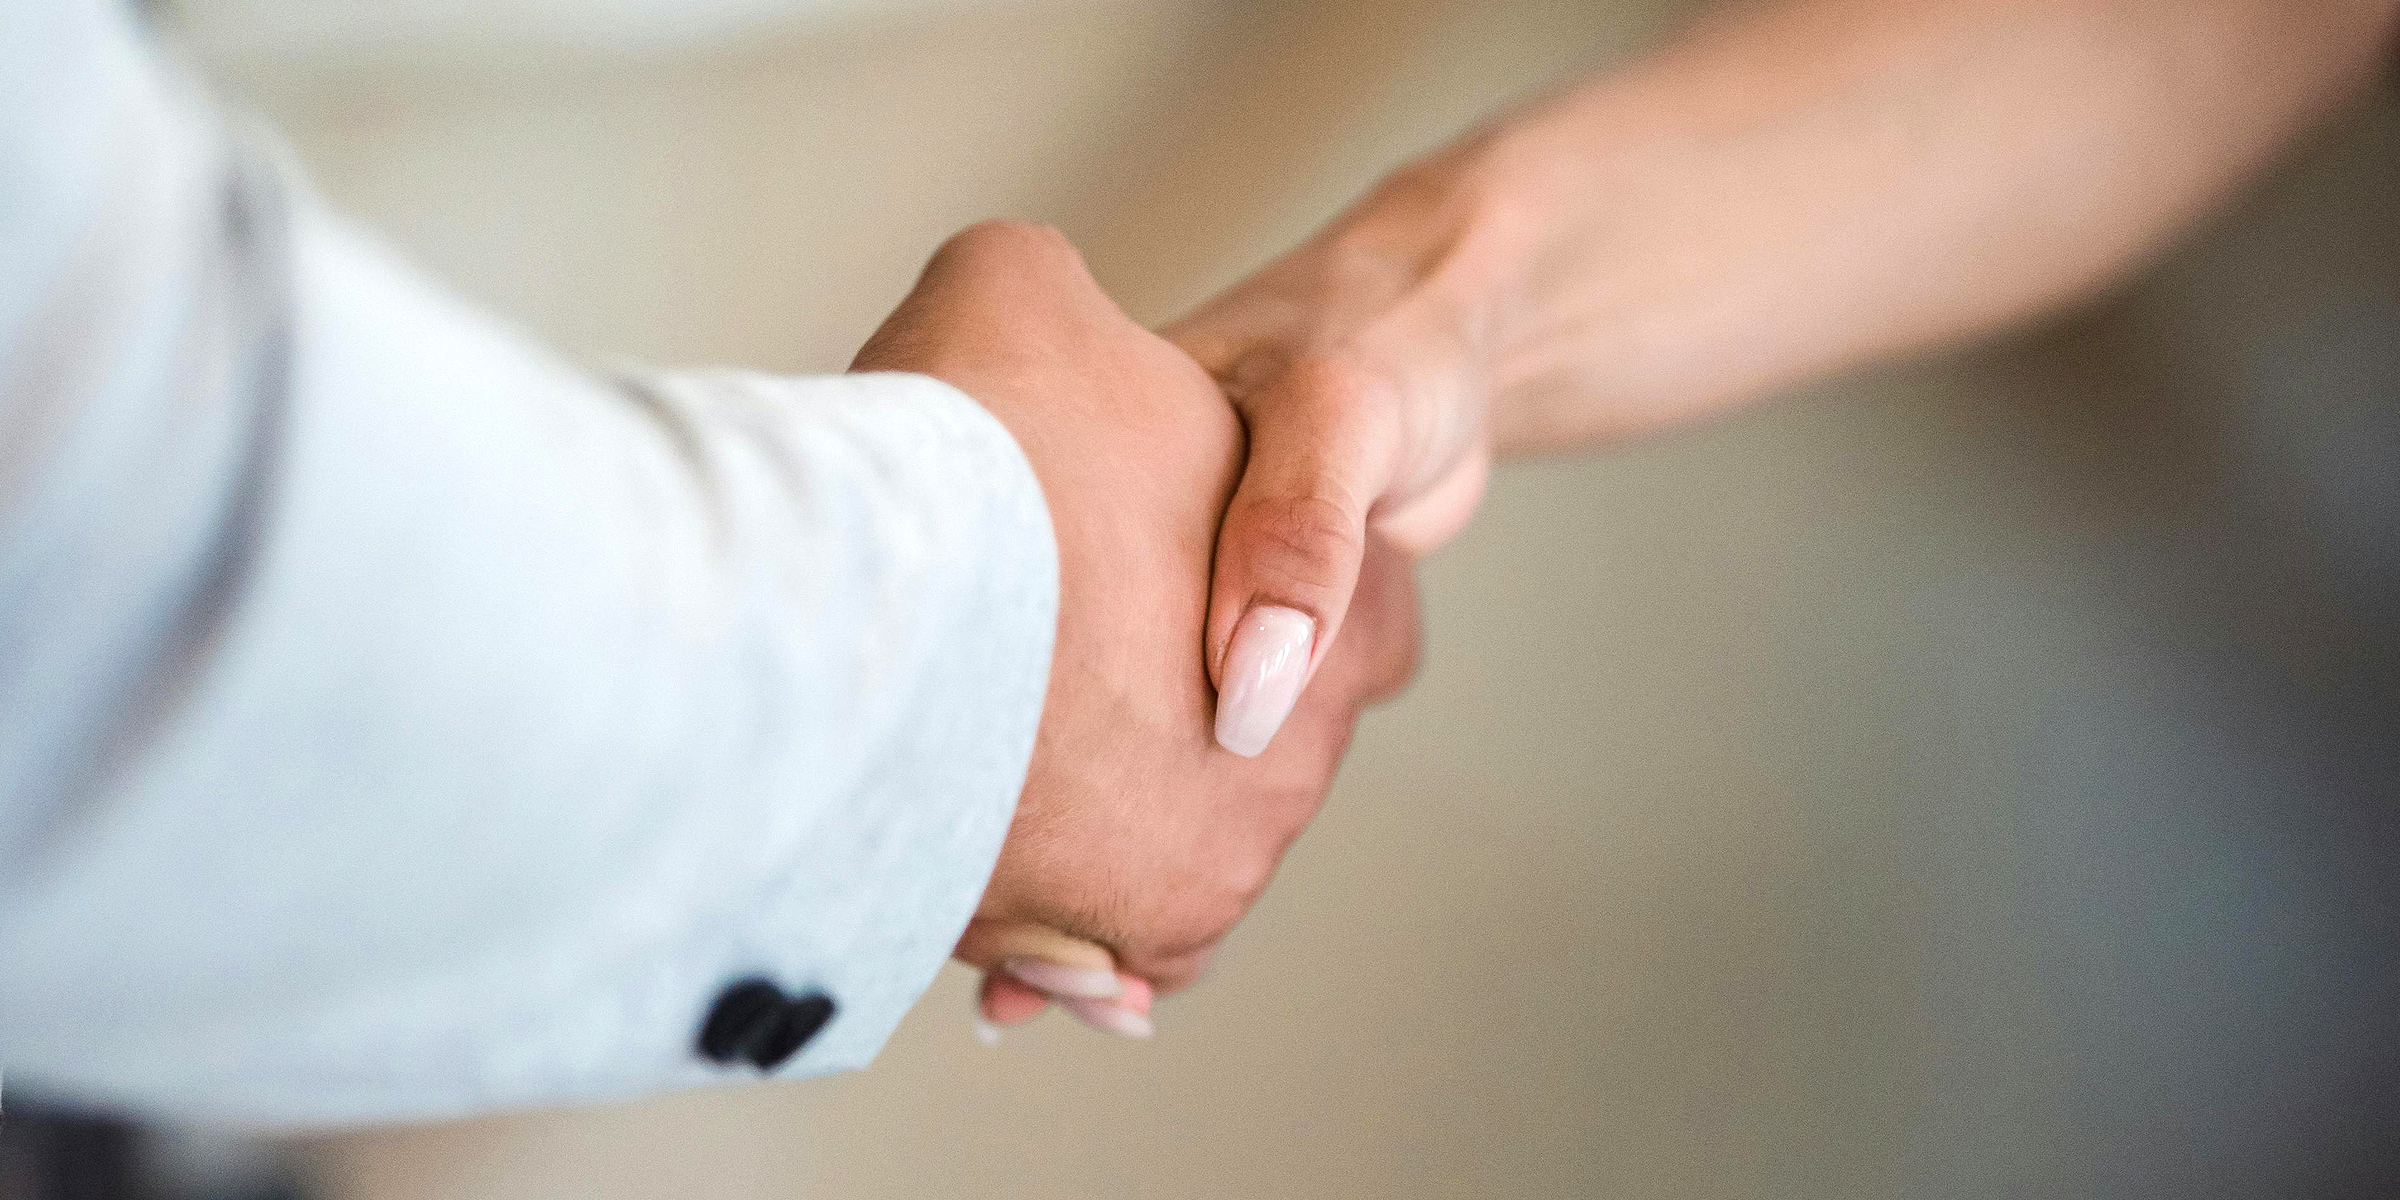 A handshake | Source: Pexels